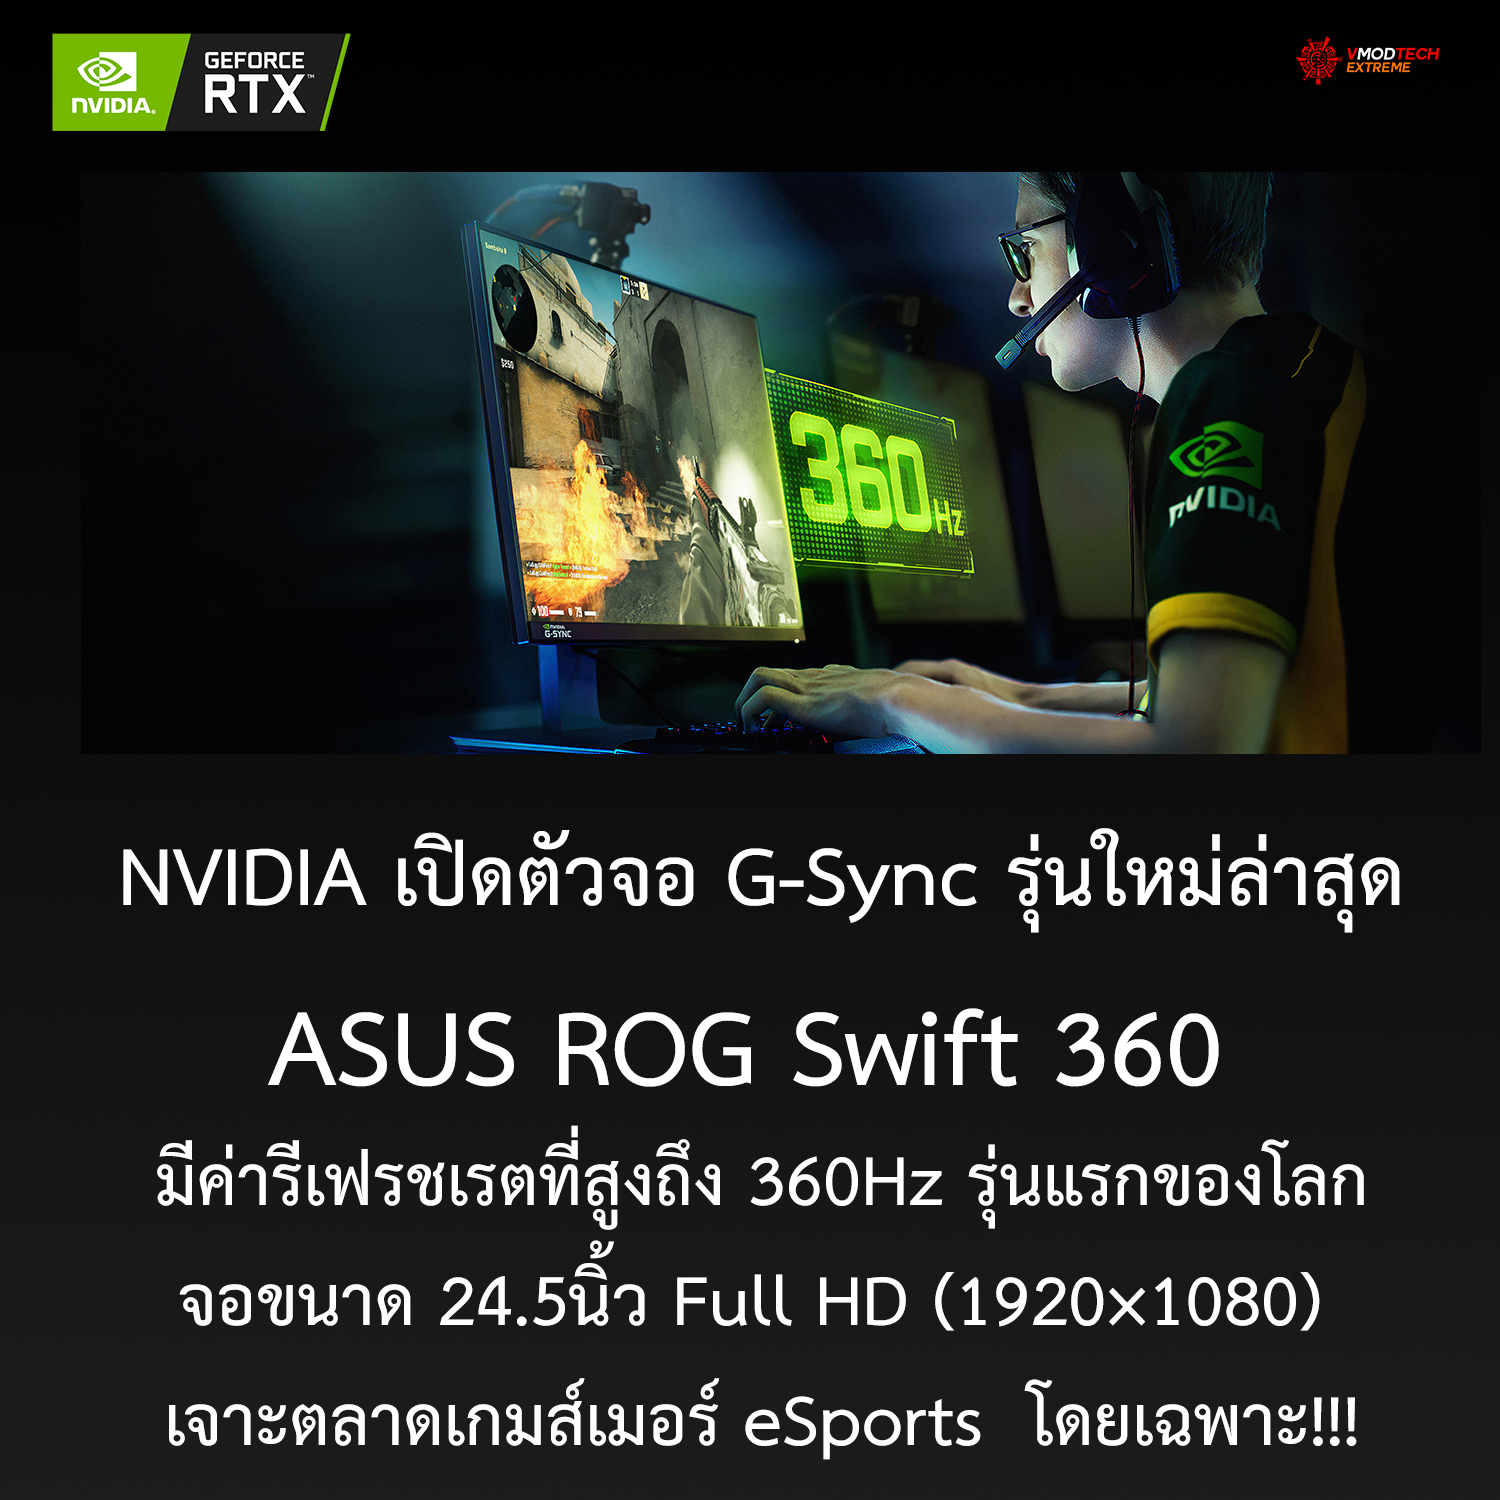 asus rog swift 3601 NVIDIA เปิดตัวจอ G Sync รุ่นใหม่ล่าสุด ASUS ROG Swift 360 ที่มีค่ารีเฟรชเรตที่สูงถึง 360Hz รุ่นแรกของโลก 